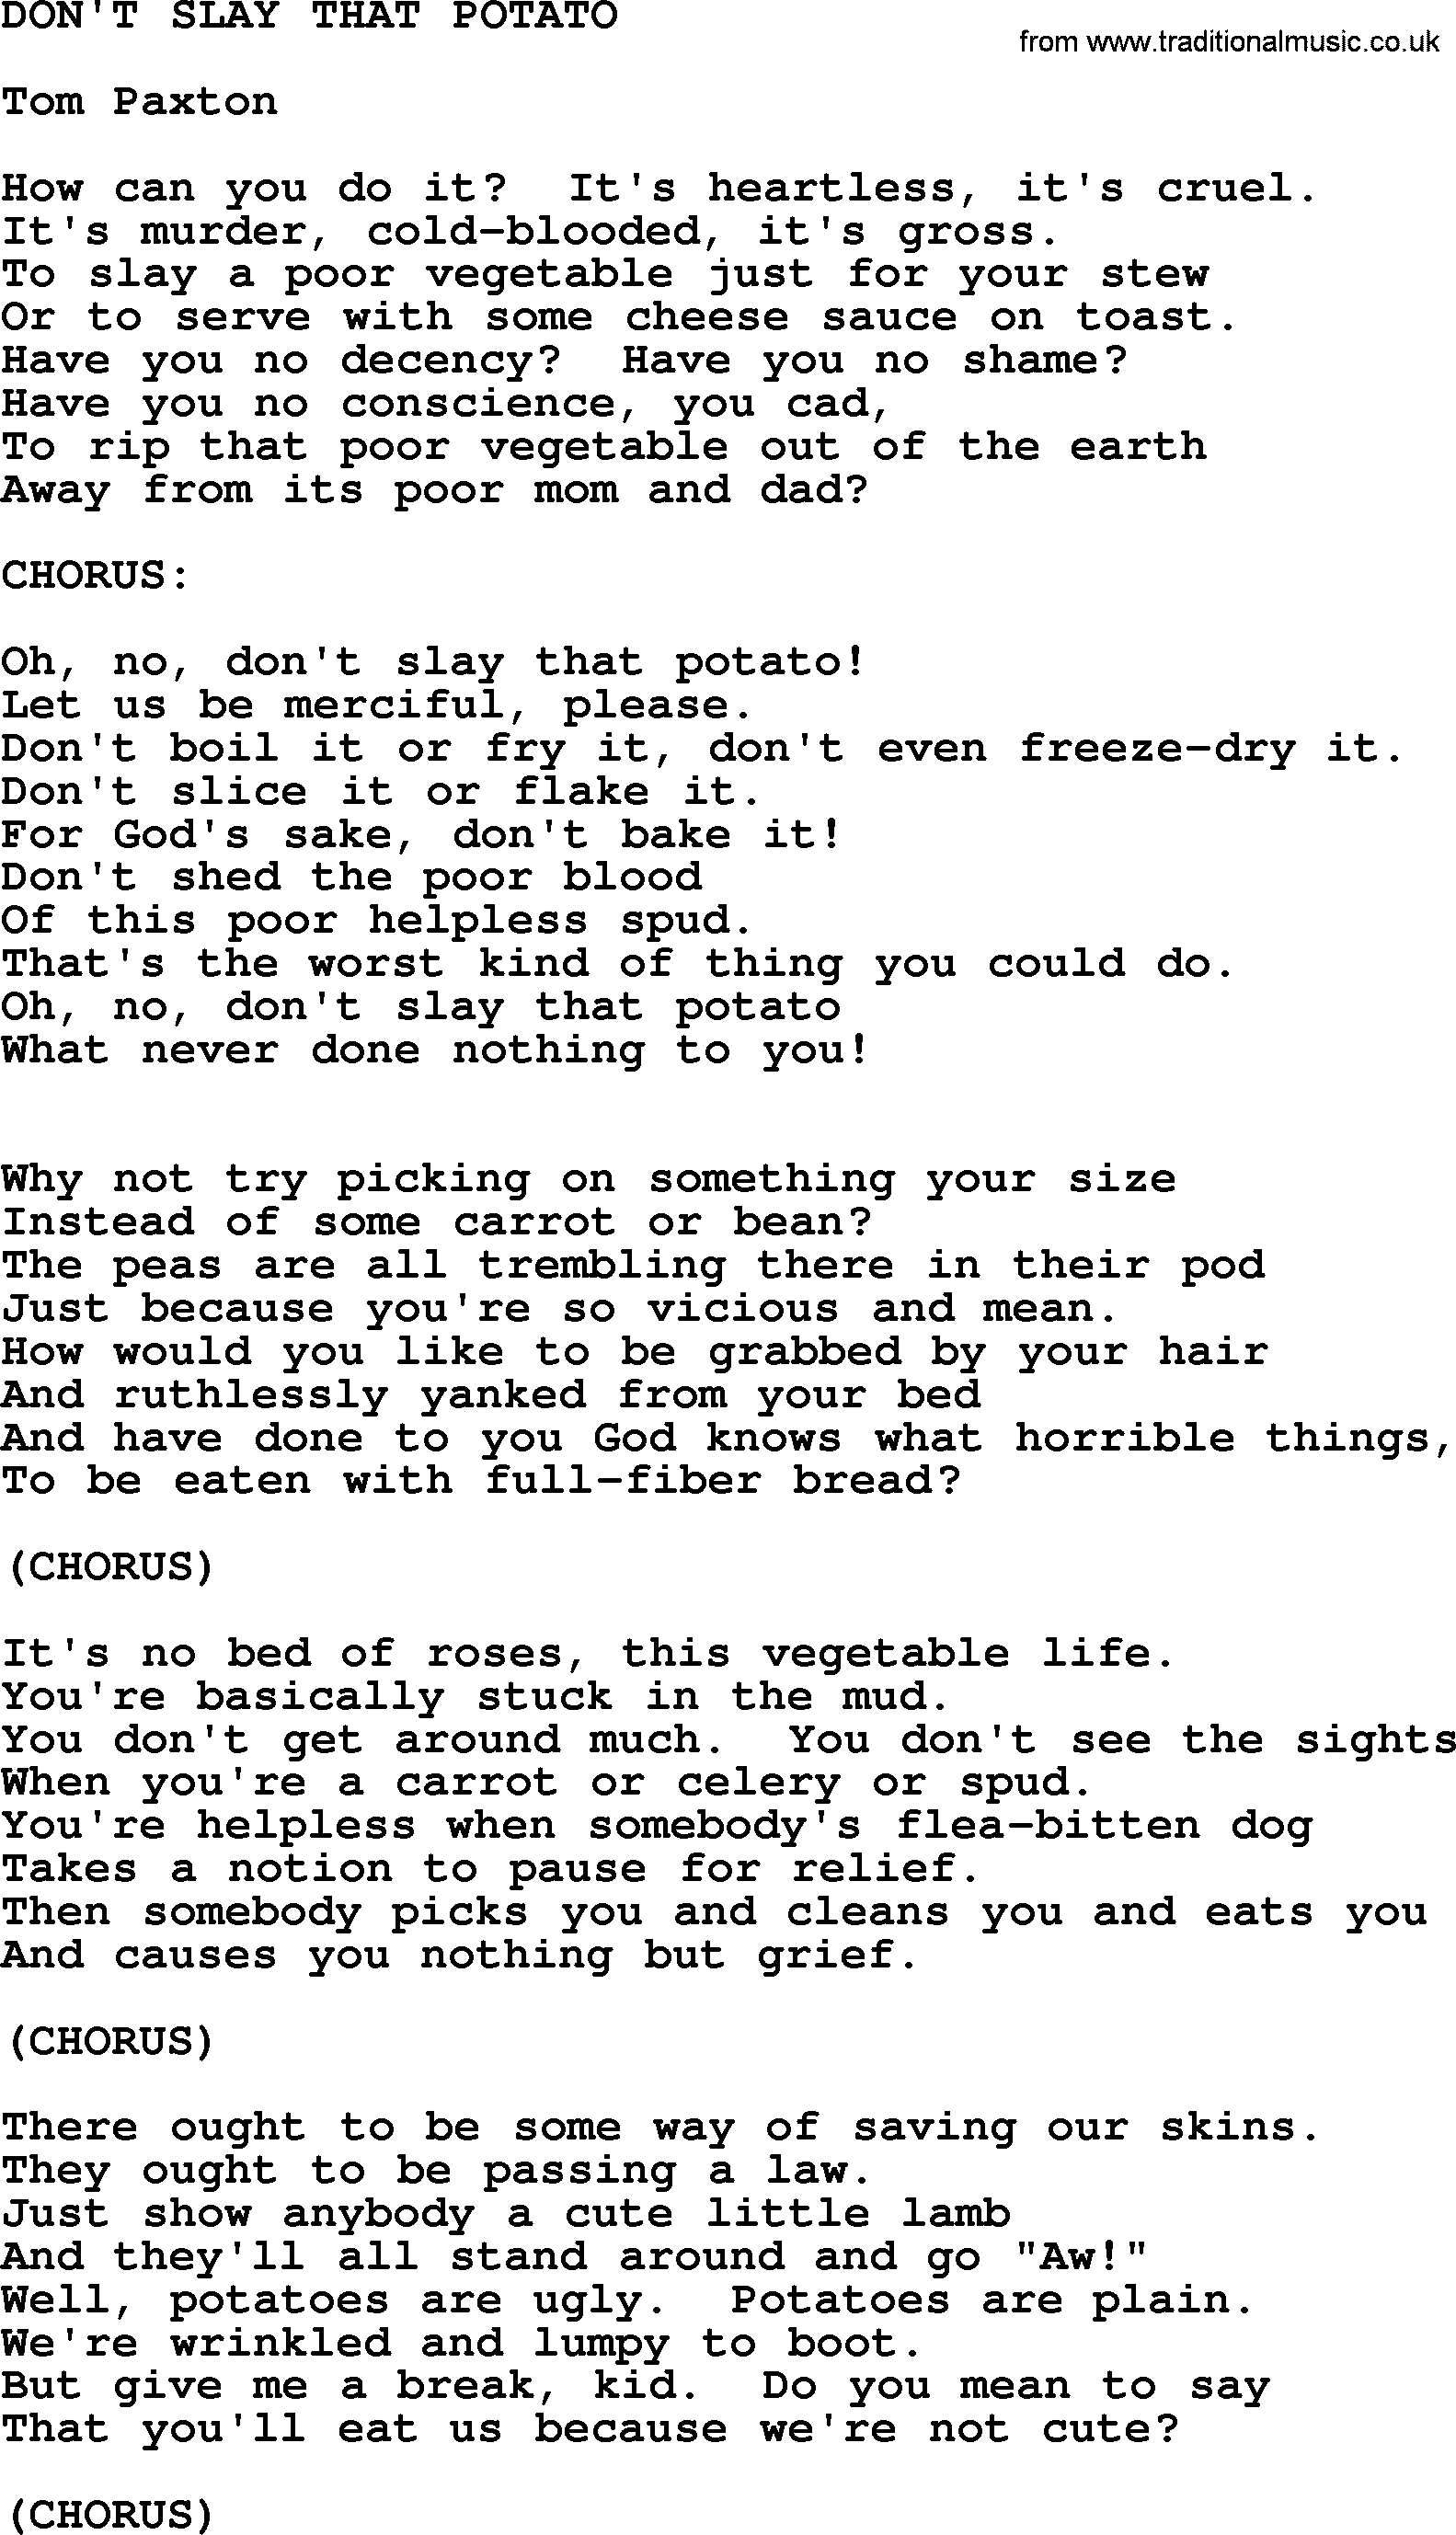 Tom Paxton song: Don't Slay That Potato, lyrics